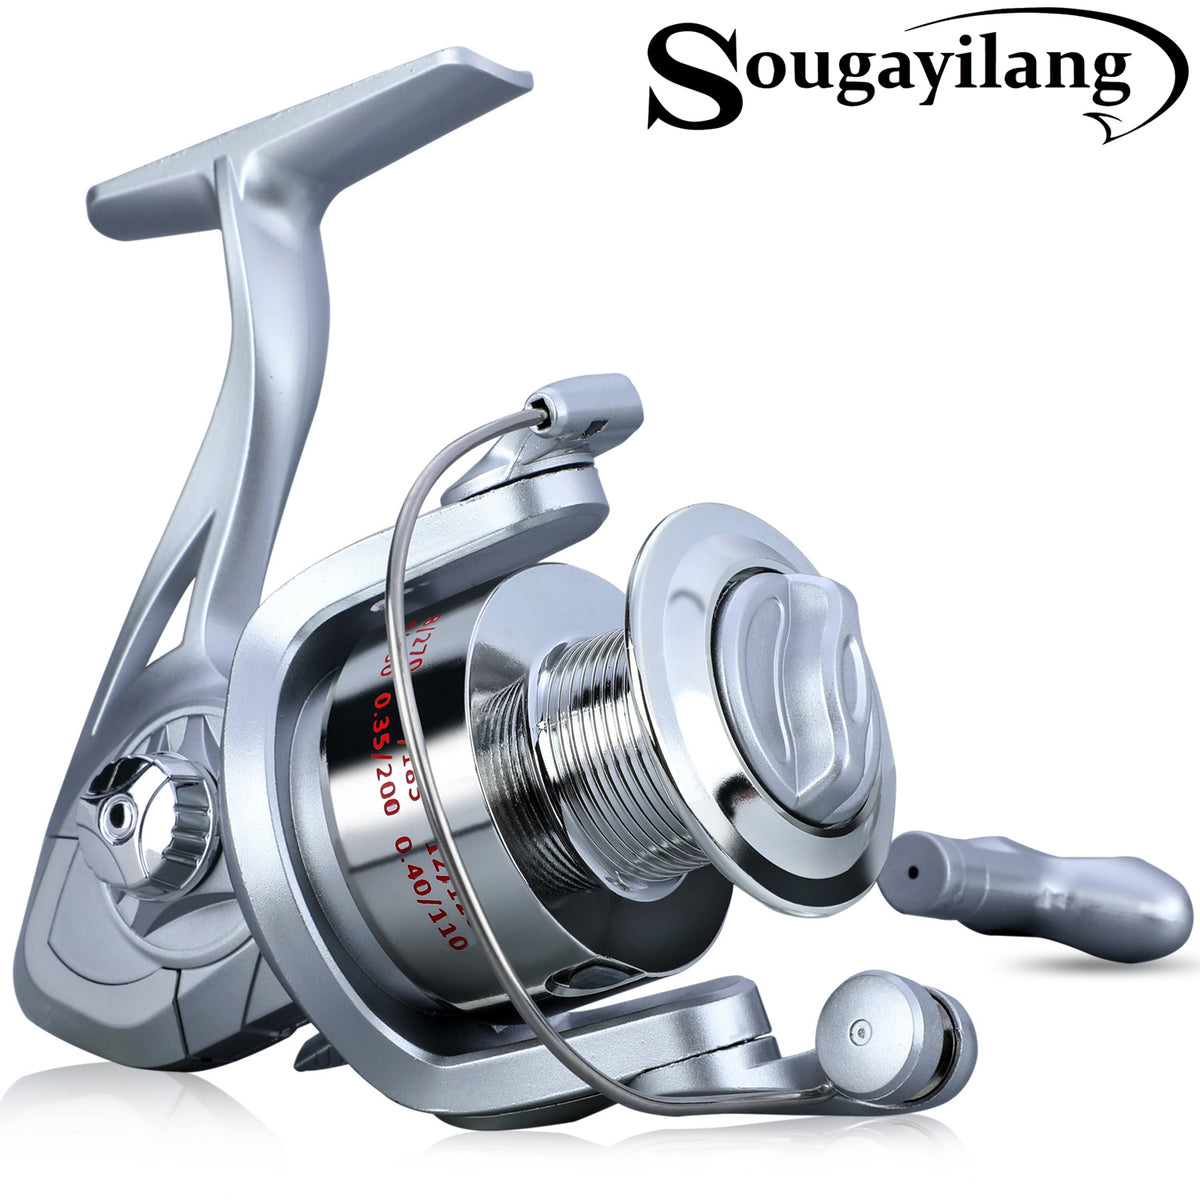 Sougayilang 1000-3000 Fishing Reels Speed 5.2:1 Gear Ratio Right/Left Hand  Sea Fishing Reel Saltwater Freshwater Spinning Reel